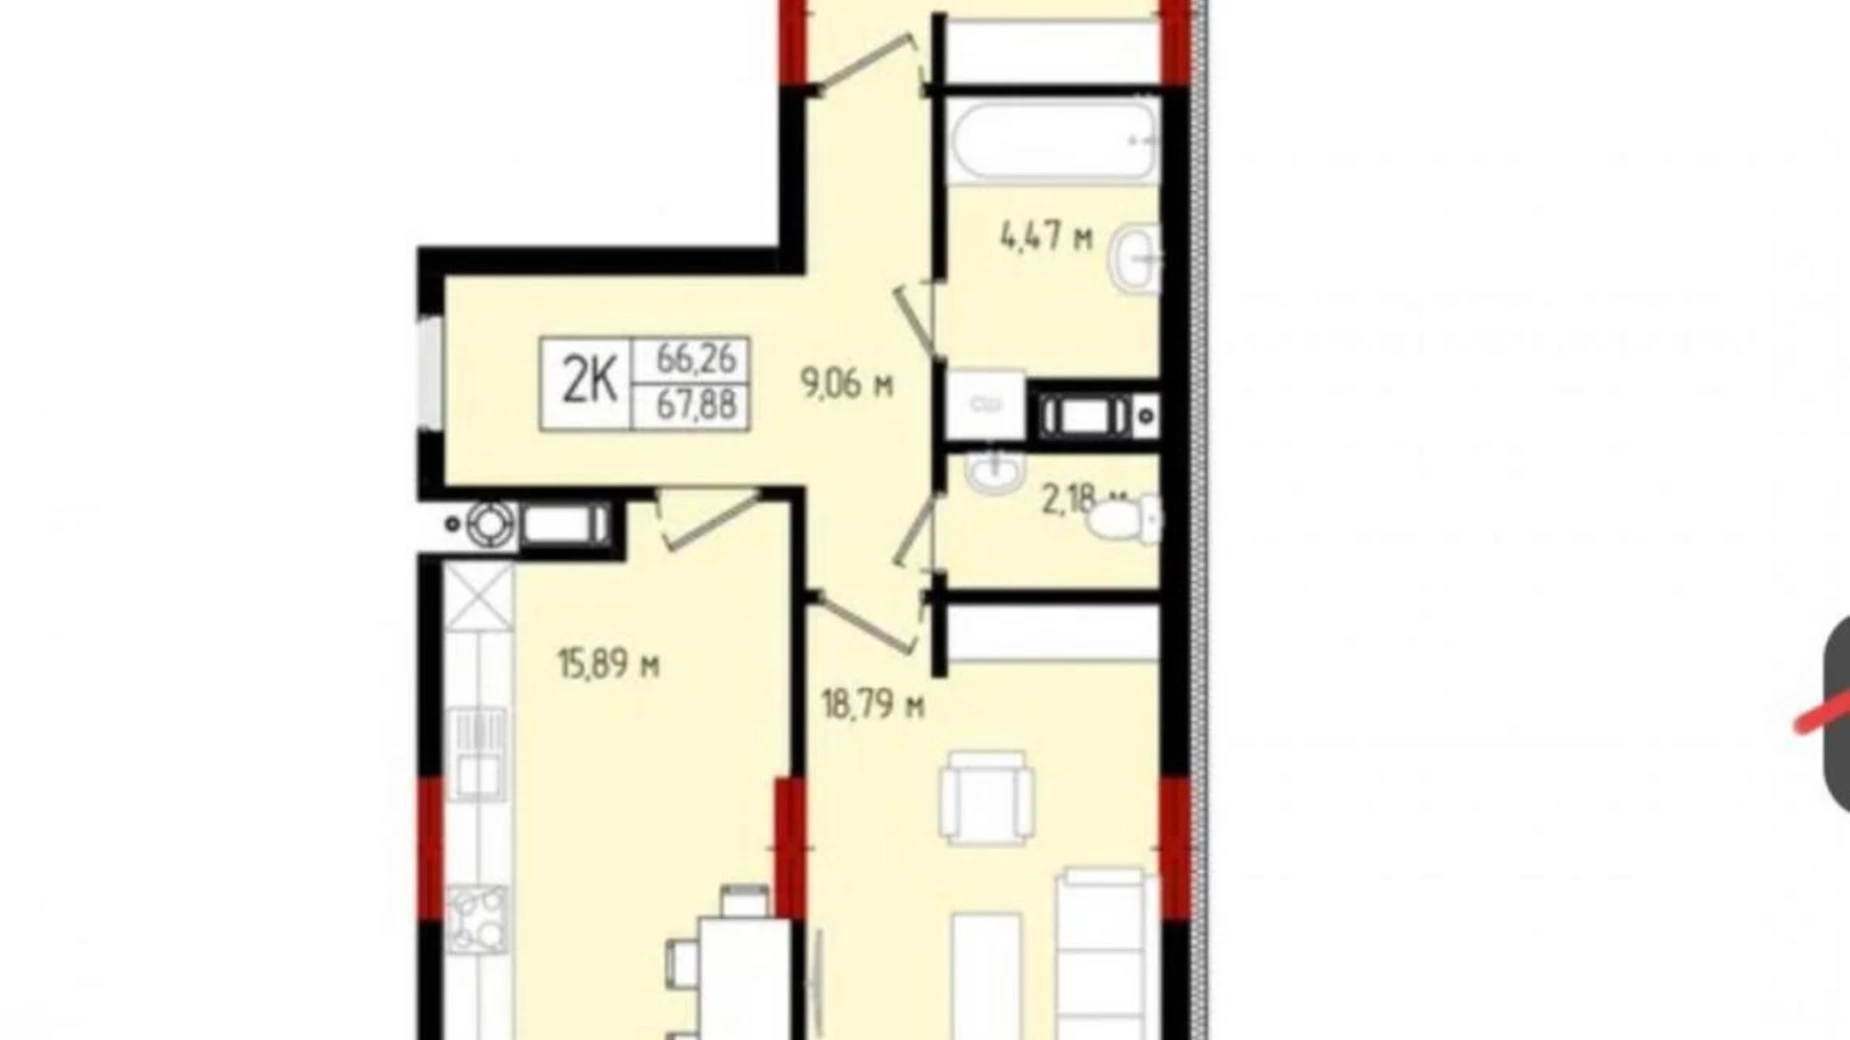 Продается 2-комнатная квартира 68 кв. м в Ивано-Франковске, ул. Ленкавского, 2В - фото 3